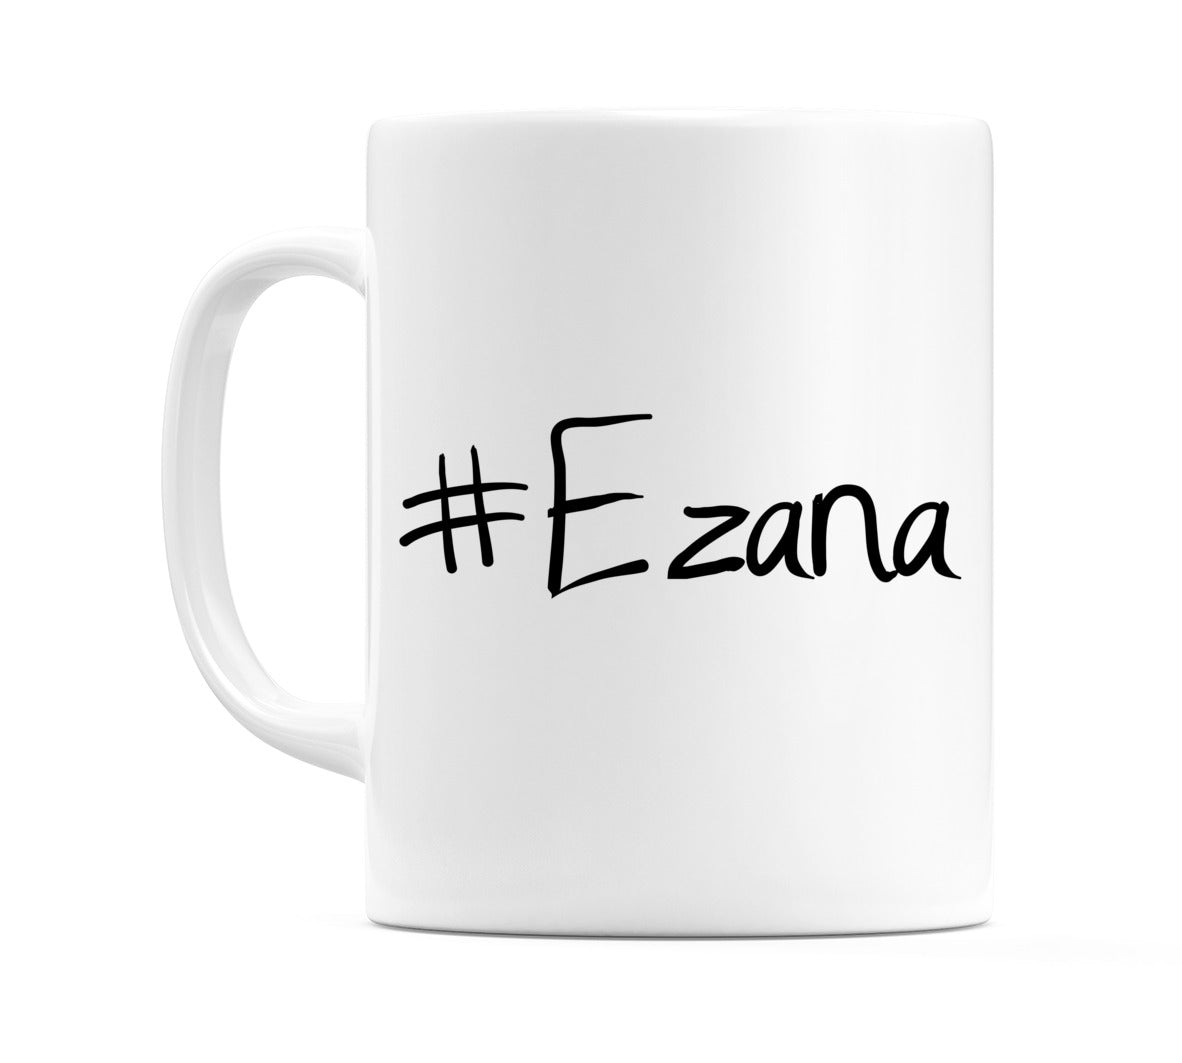 #Ezana Mug